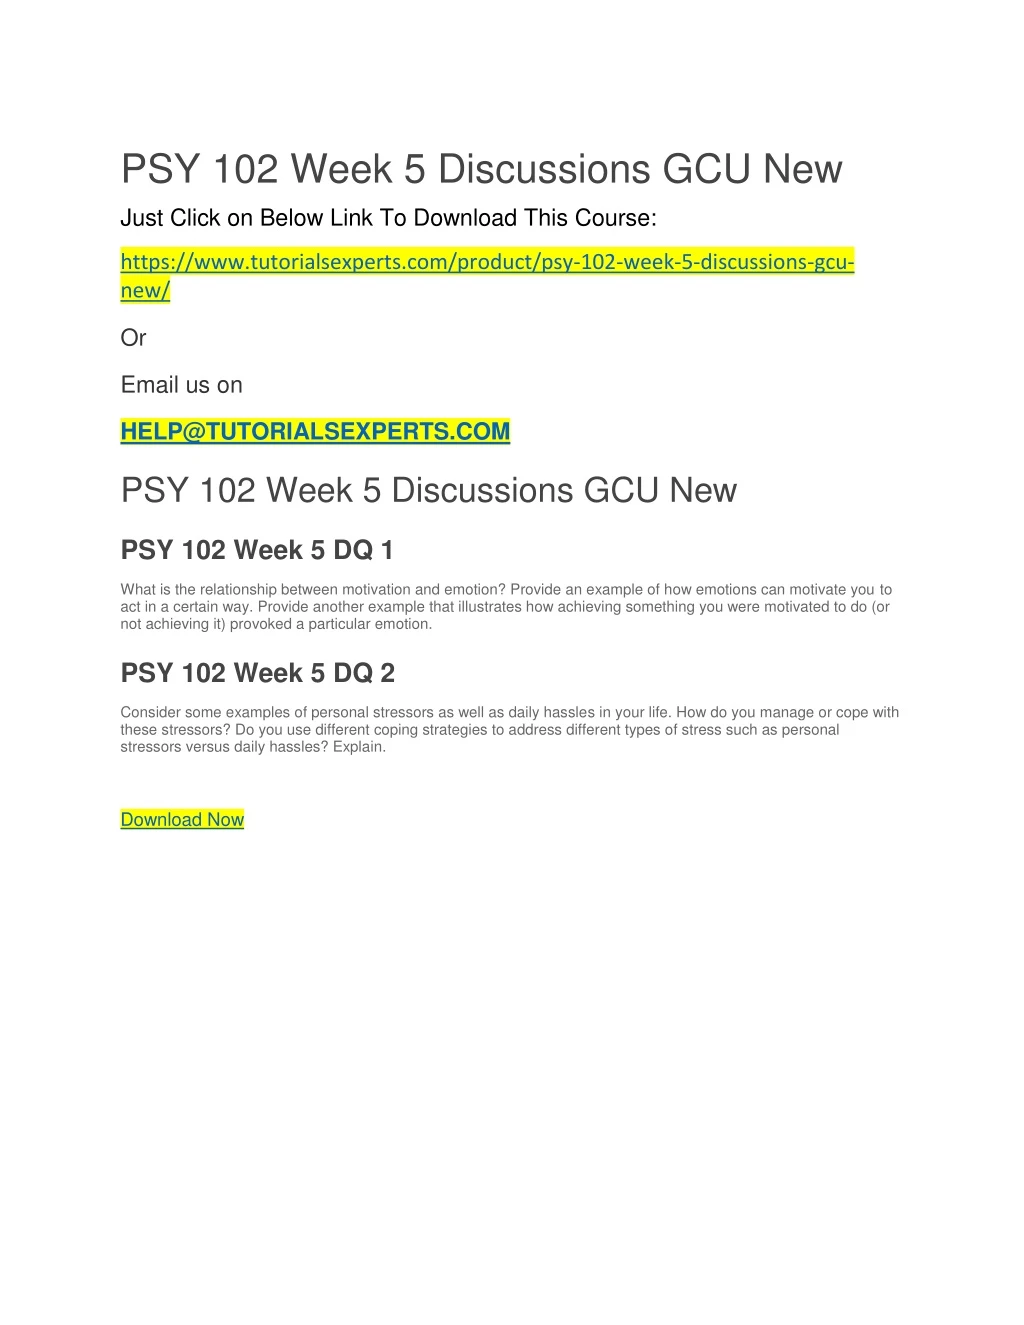 psy 102 week 5 discussions gcu new just click